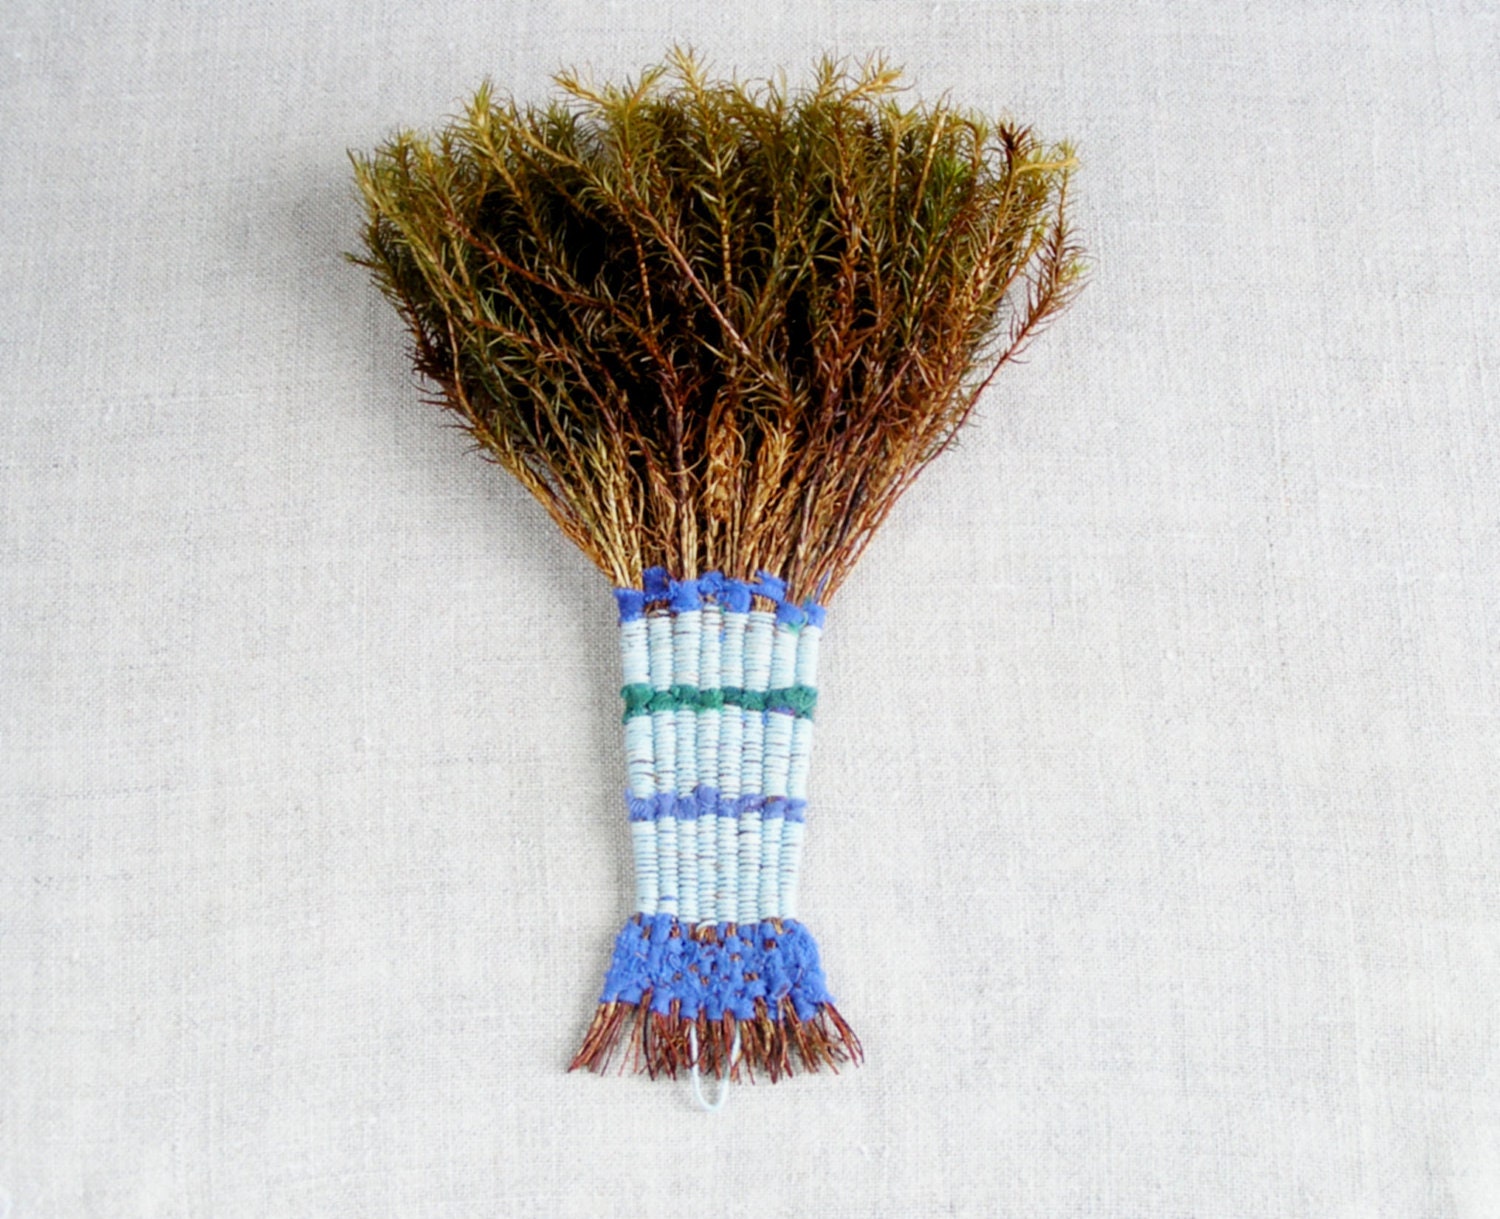 rustic wall decor - whisk broom  - nature eco decor striped in blue green - Birribe